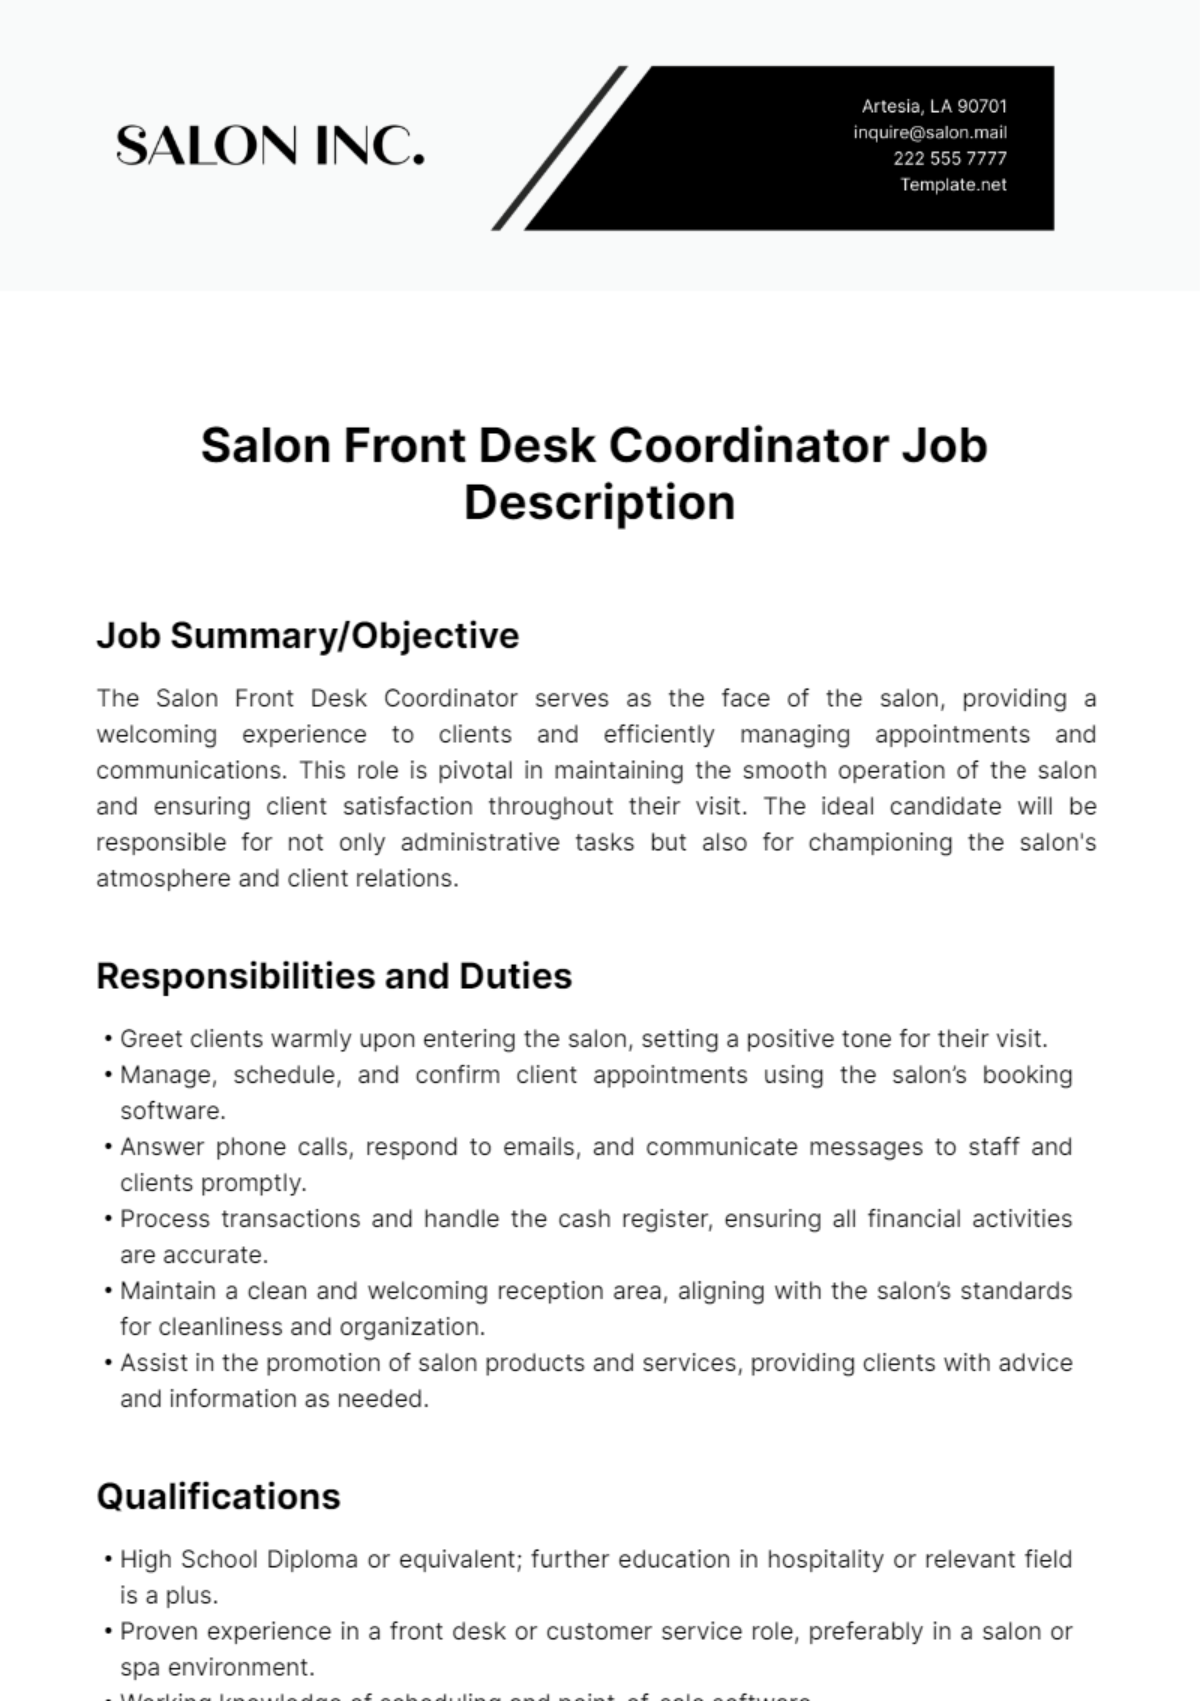 Salon Front Desk Coordinator Job Description Template